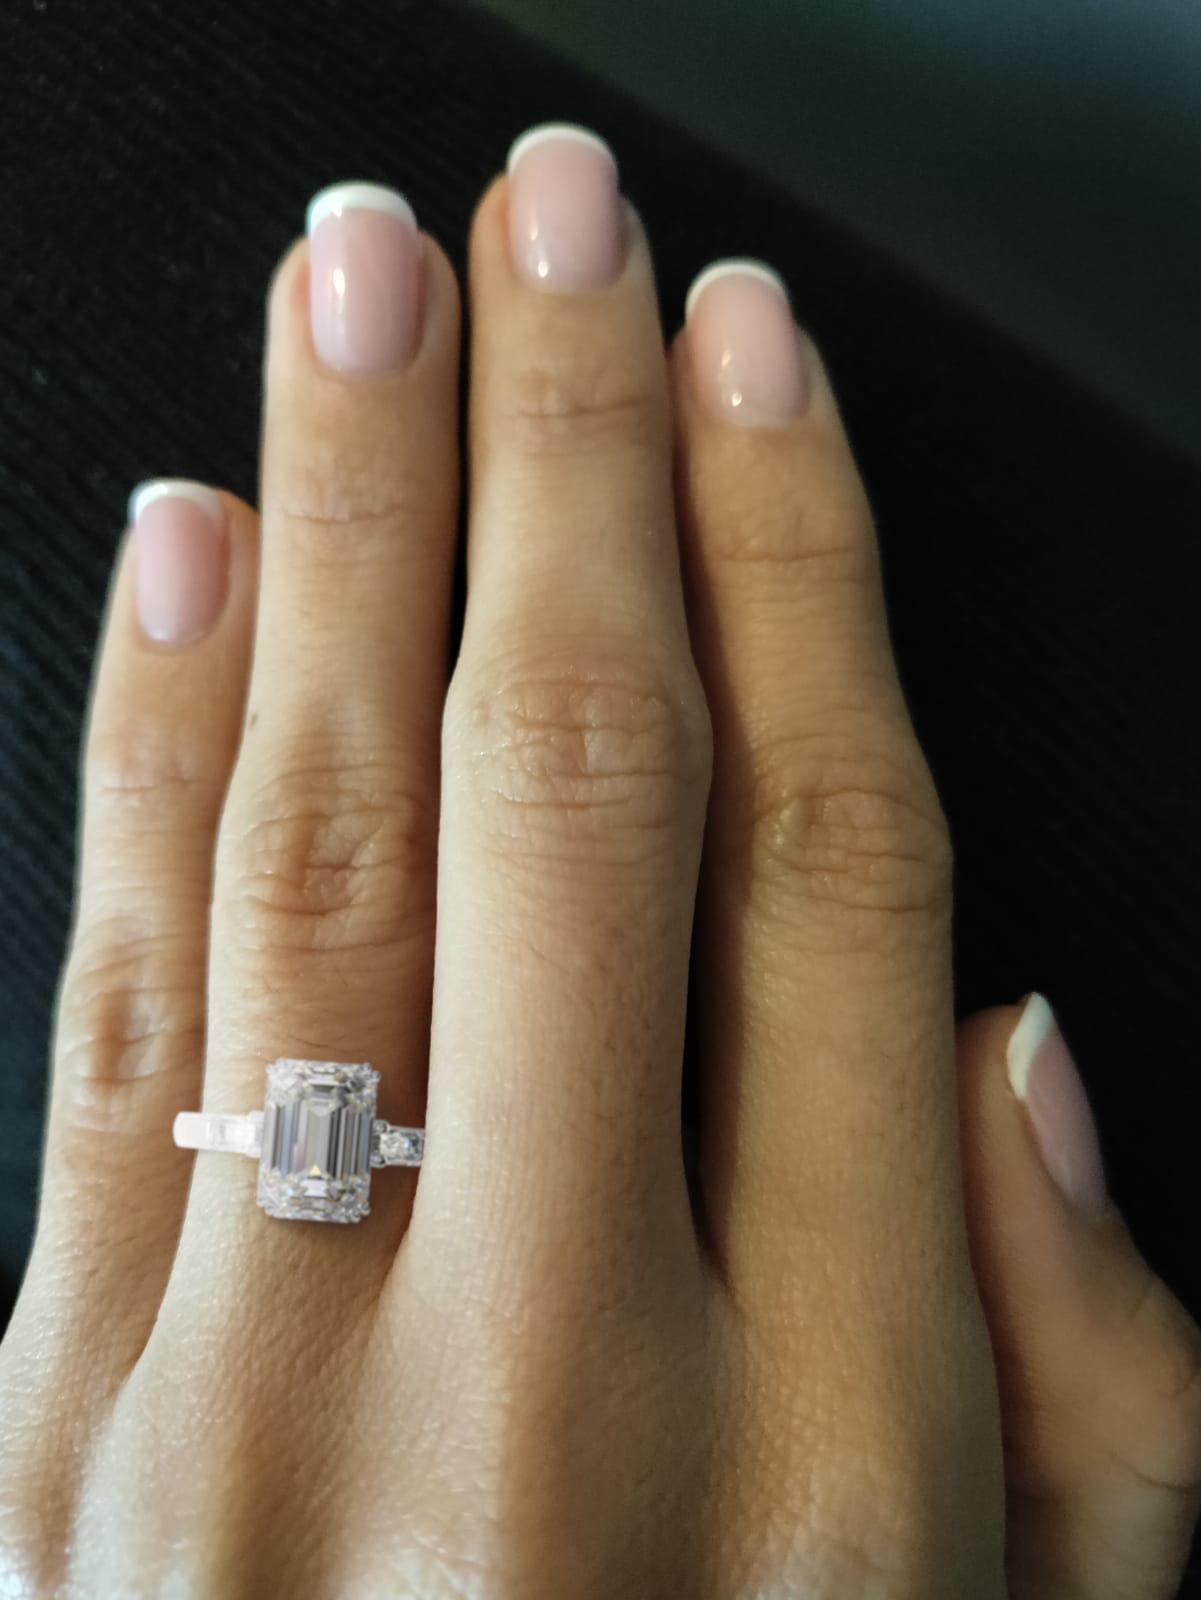 GIA Certified 3 Carat Emerald Cut Diamond Ring Triple Excellent Cut 
faint fluorescence